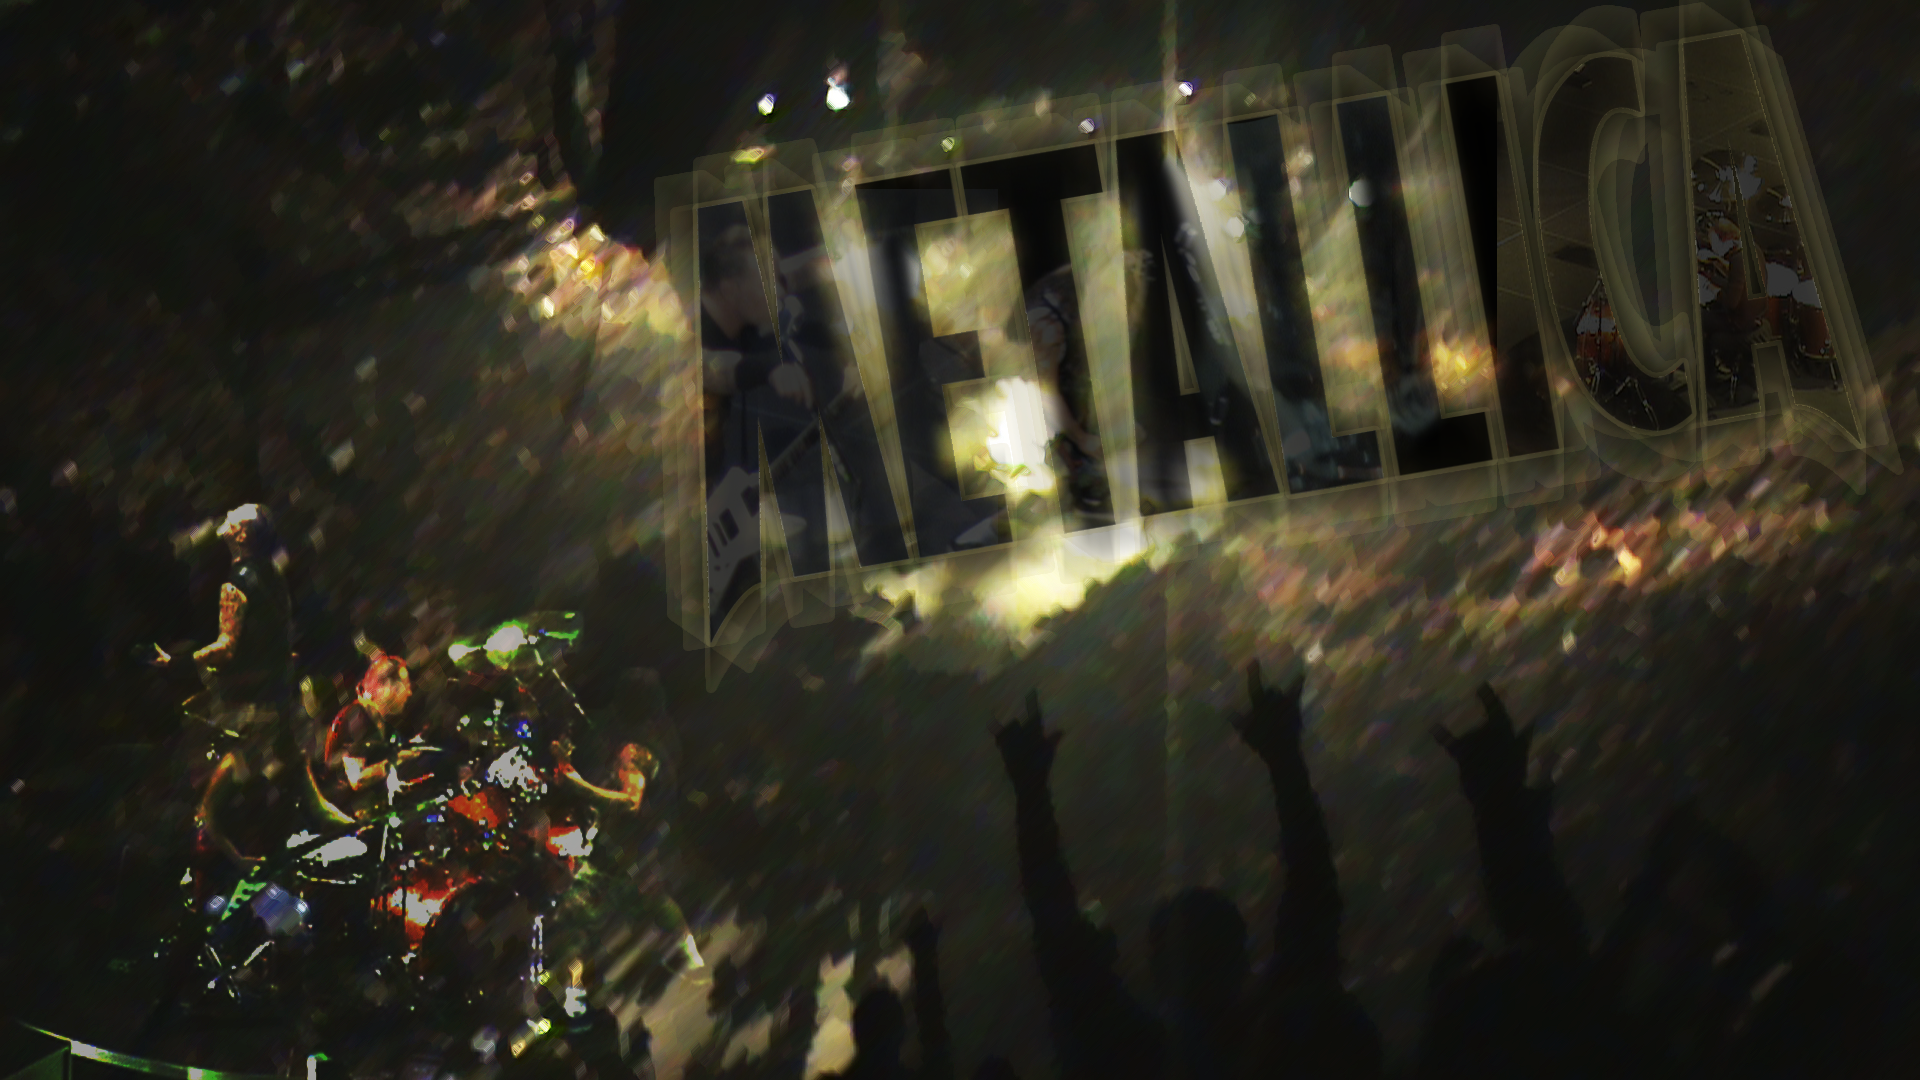 77 Metallica HD Wallpapers | Backgrounds - Wallpaper Abyss